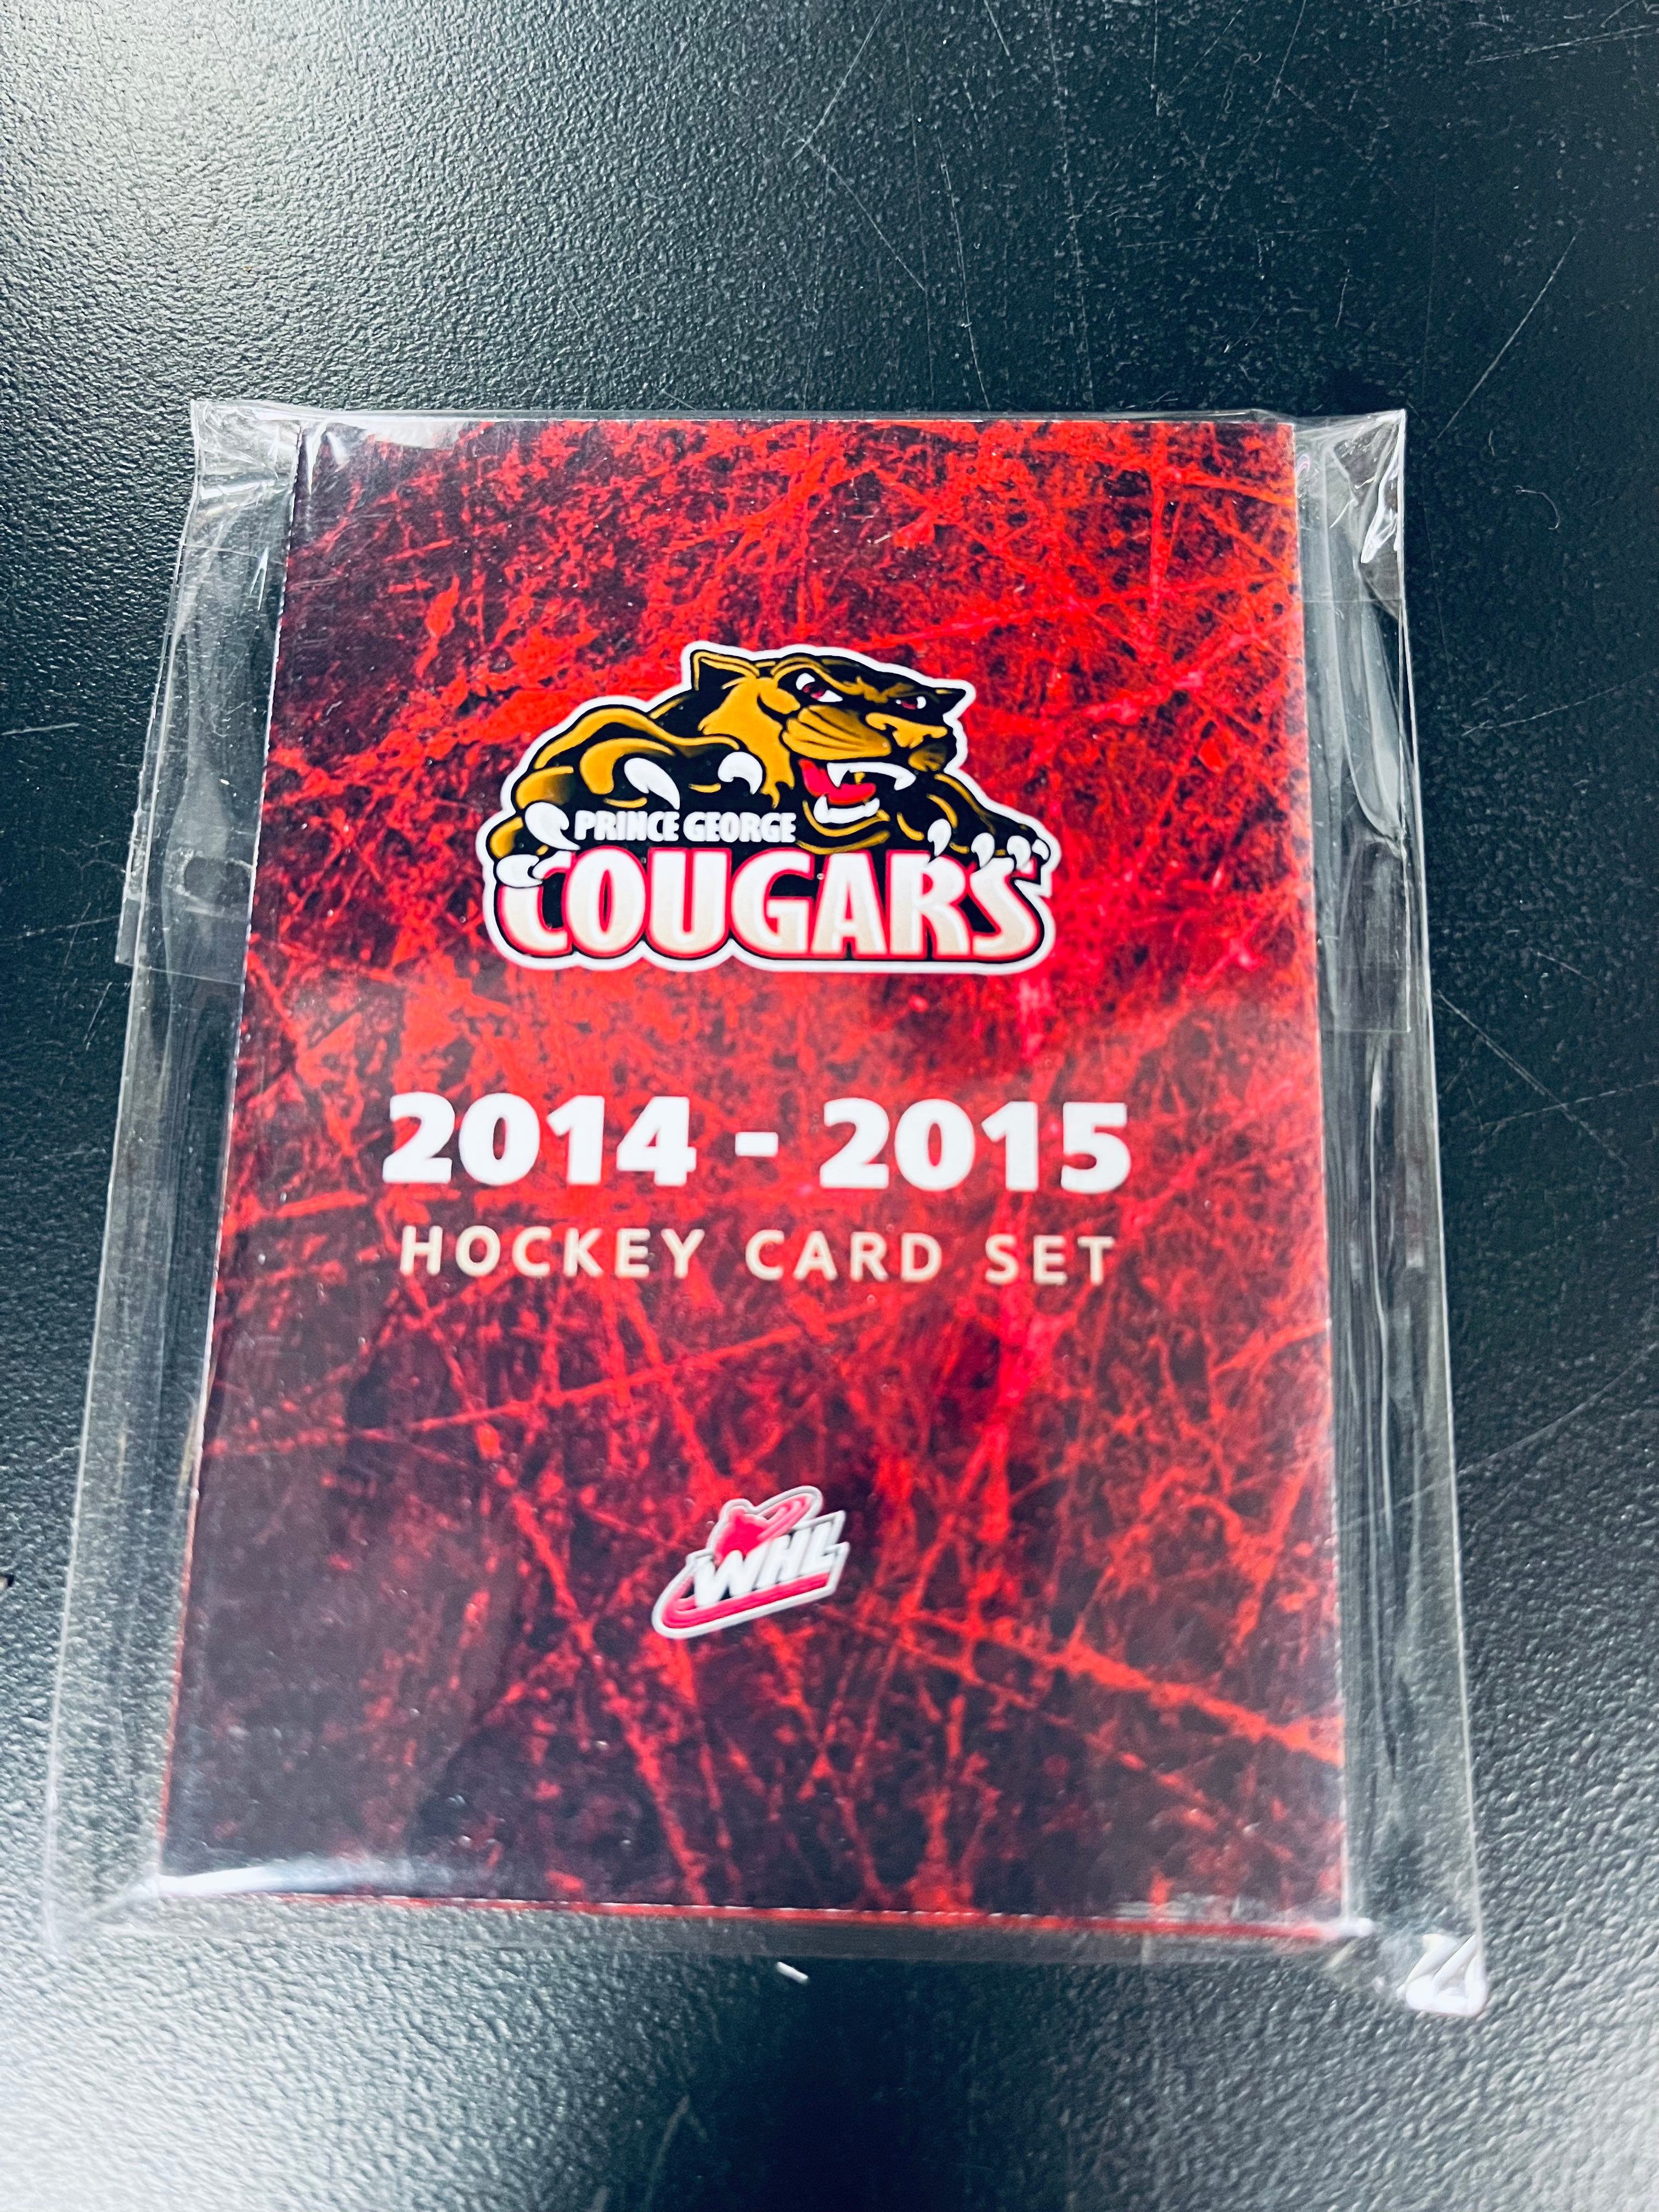 2014-2015 Hockey Card Set